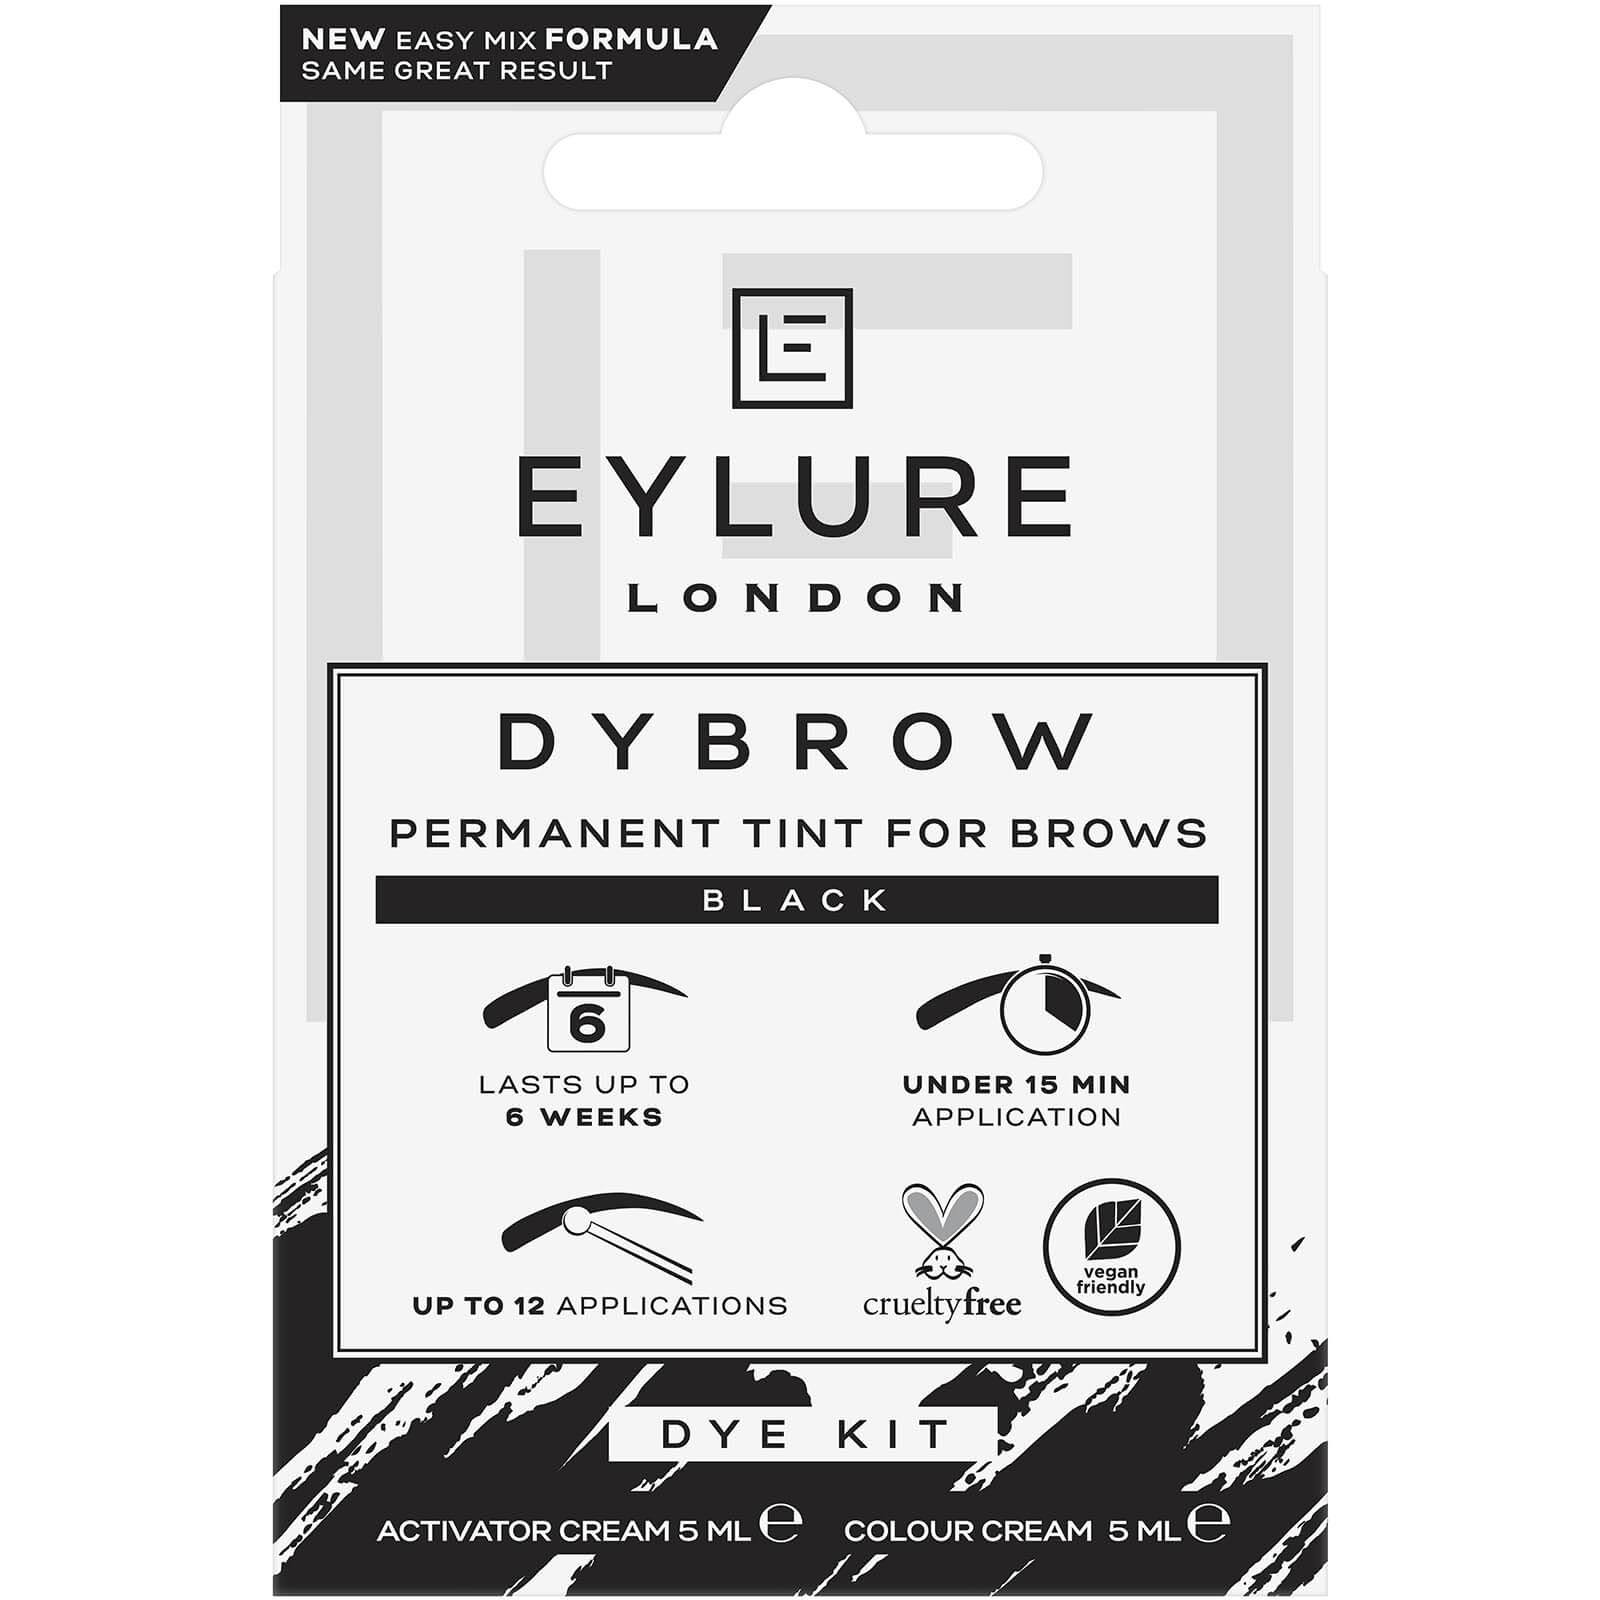 Eylure Pro Brow Dybrow Dye Kit - Black